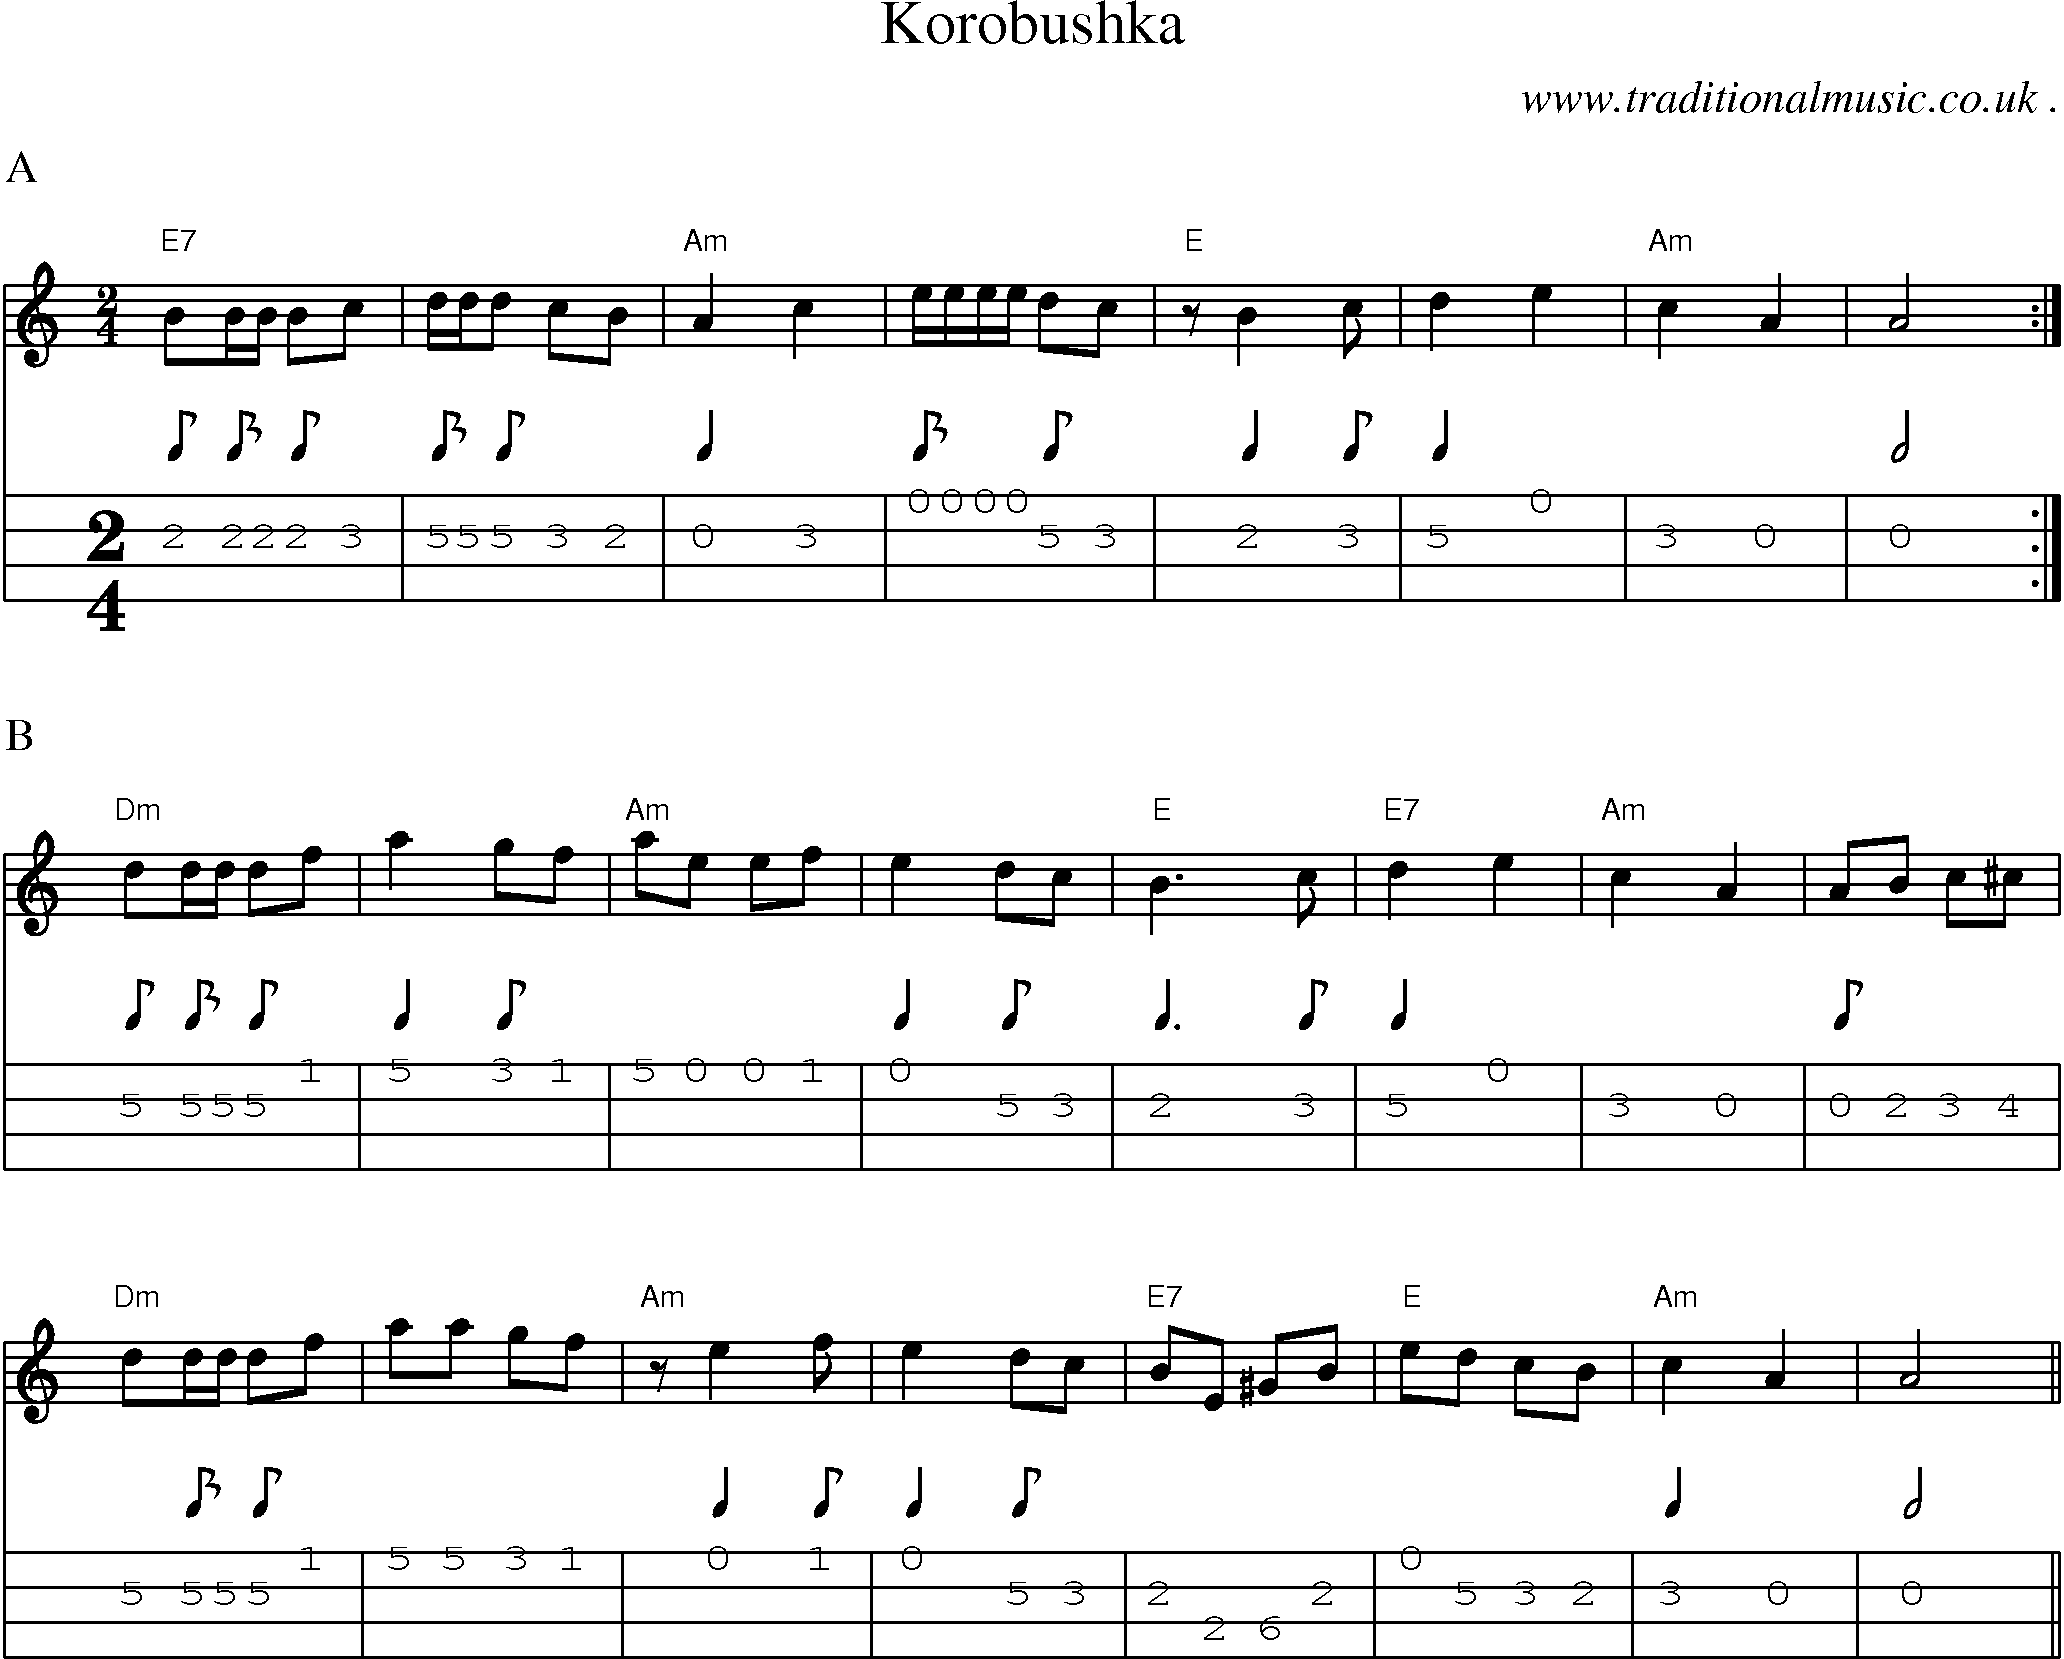 Music Score and Guitar Tabs for Korobushka